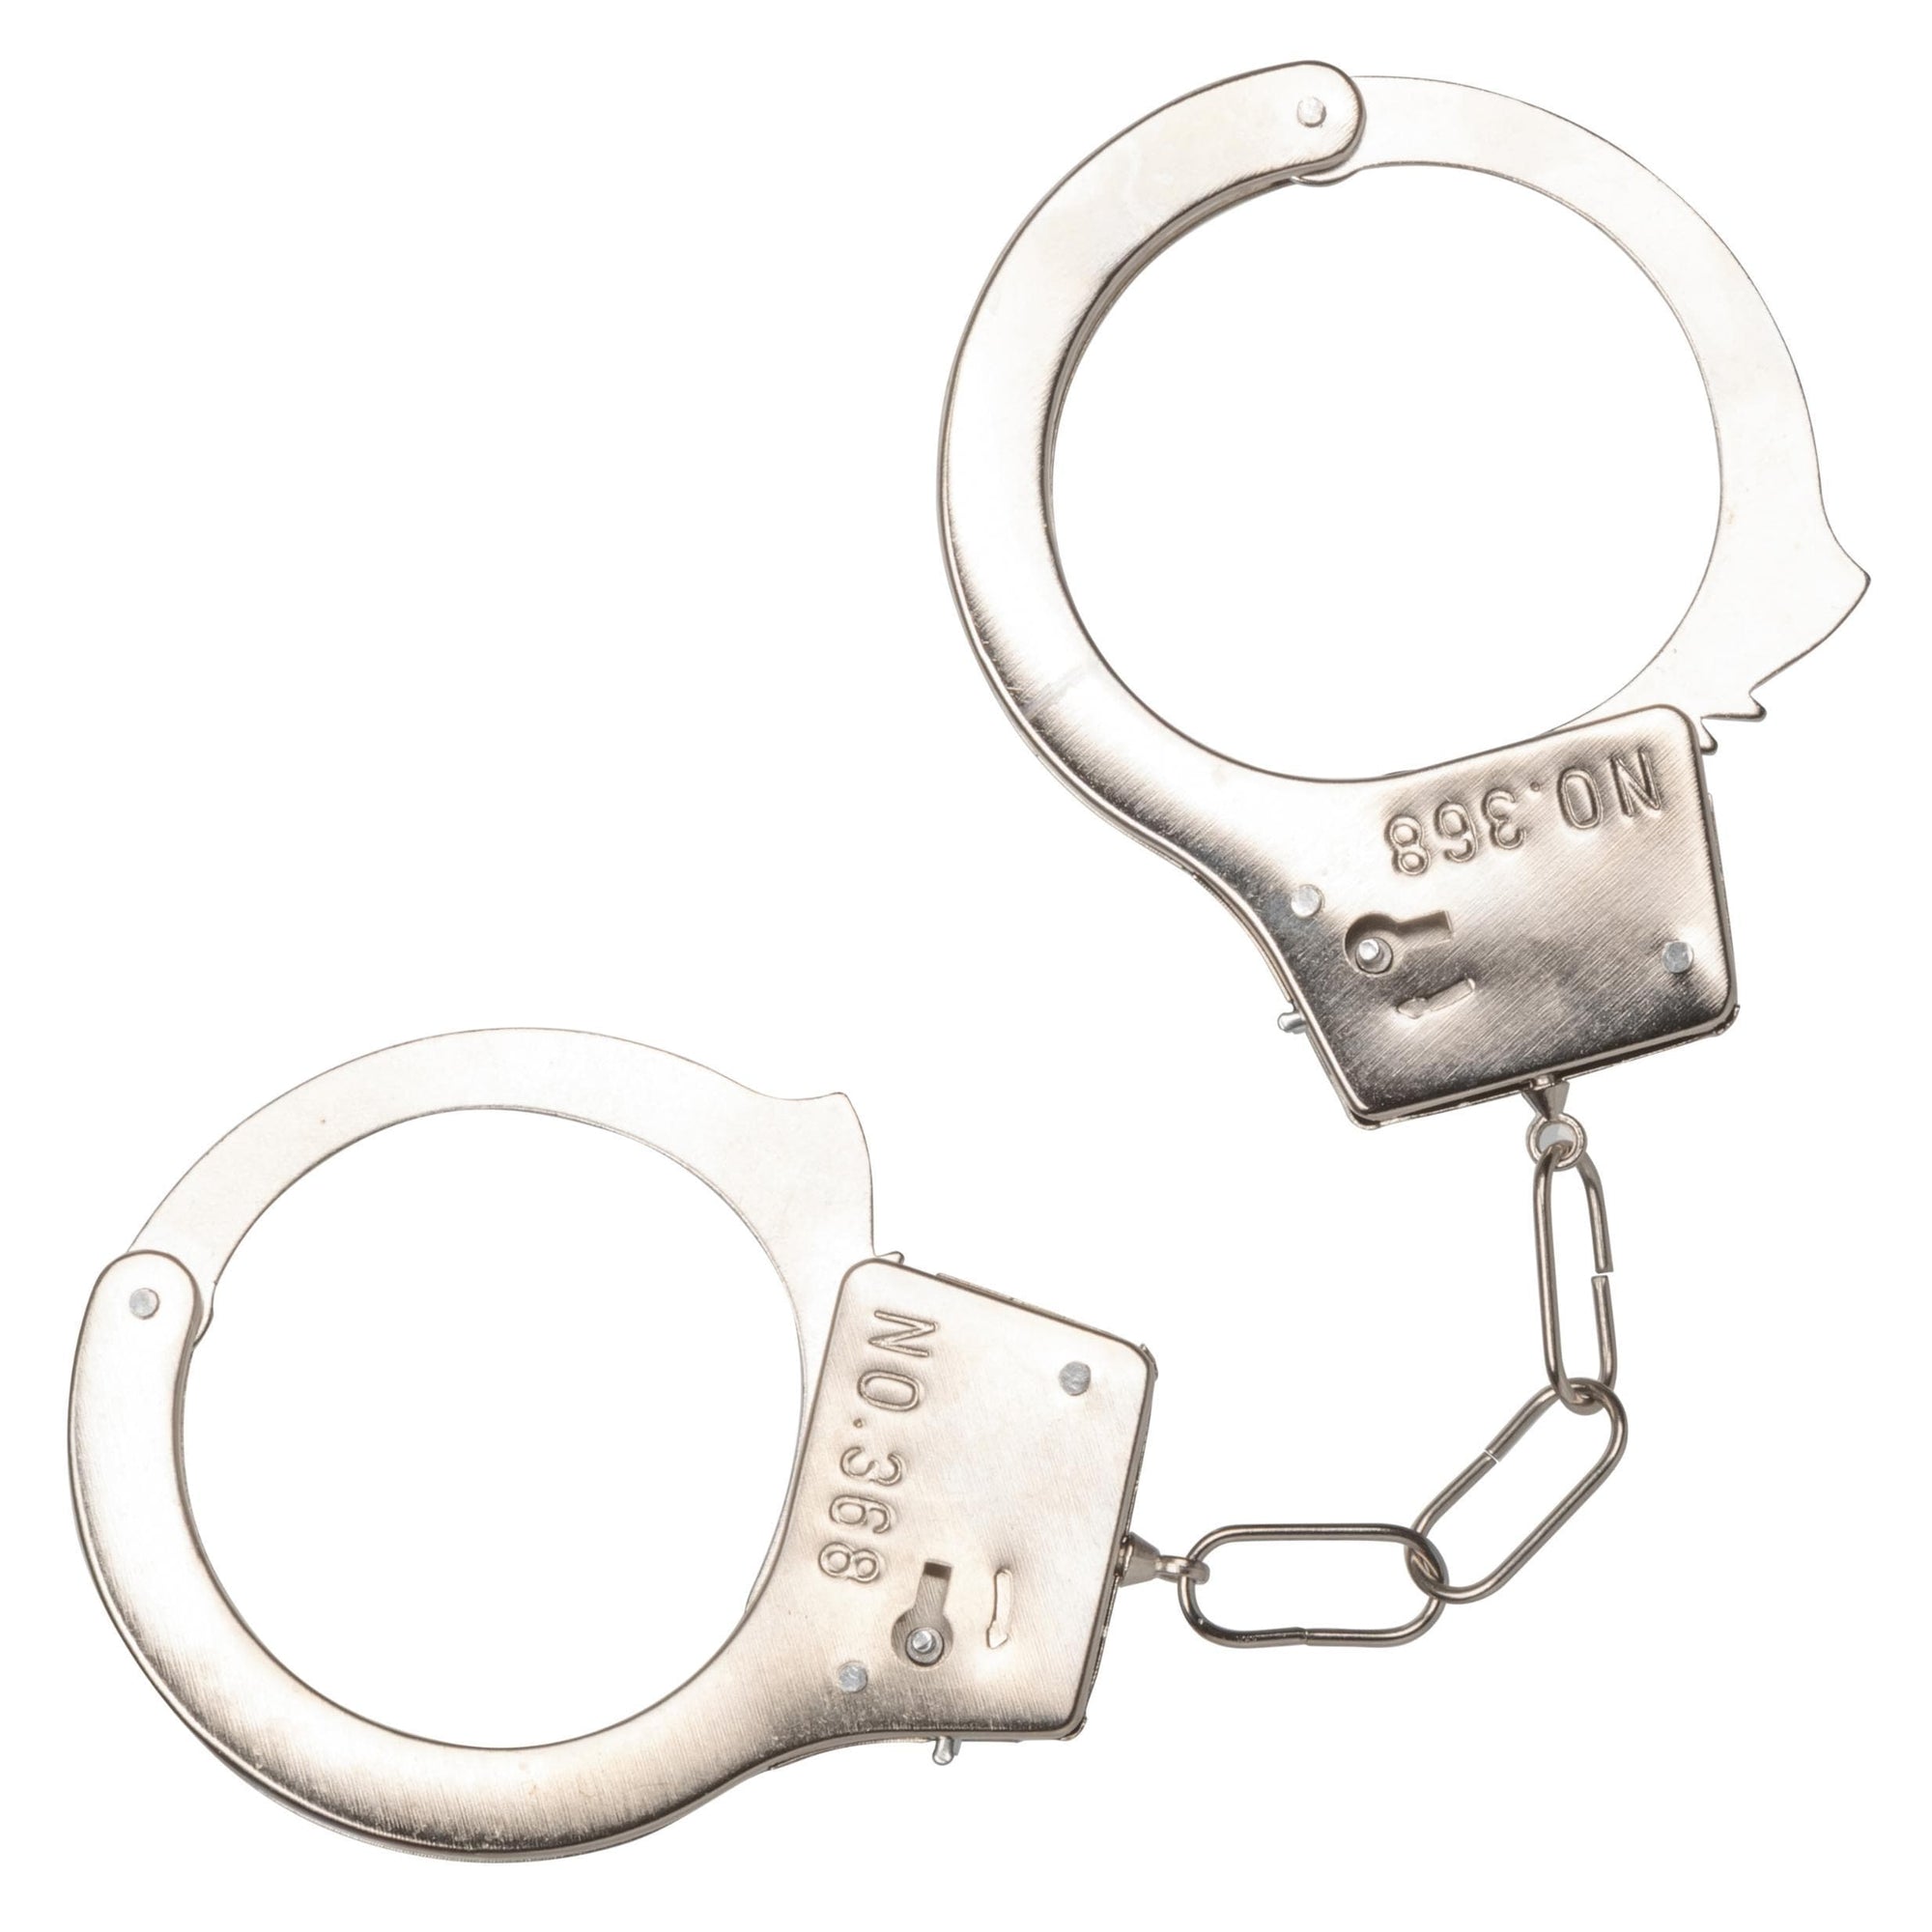 handcuffs for sale, handcuffs